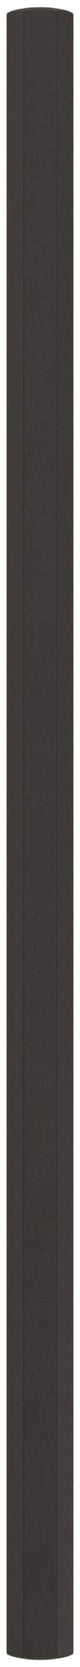 Amerock Cabinet Pull Matte Black 10-1/16 inch (256 mm) Center-to-Center Caliber 1 Pack Drawer Pull Cabinet Handle Cabinet Hardware